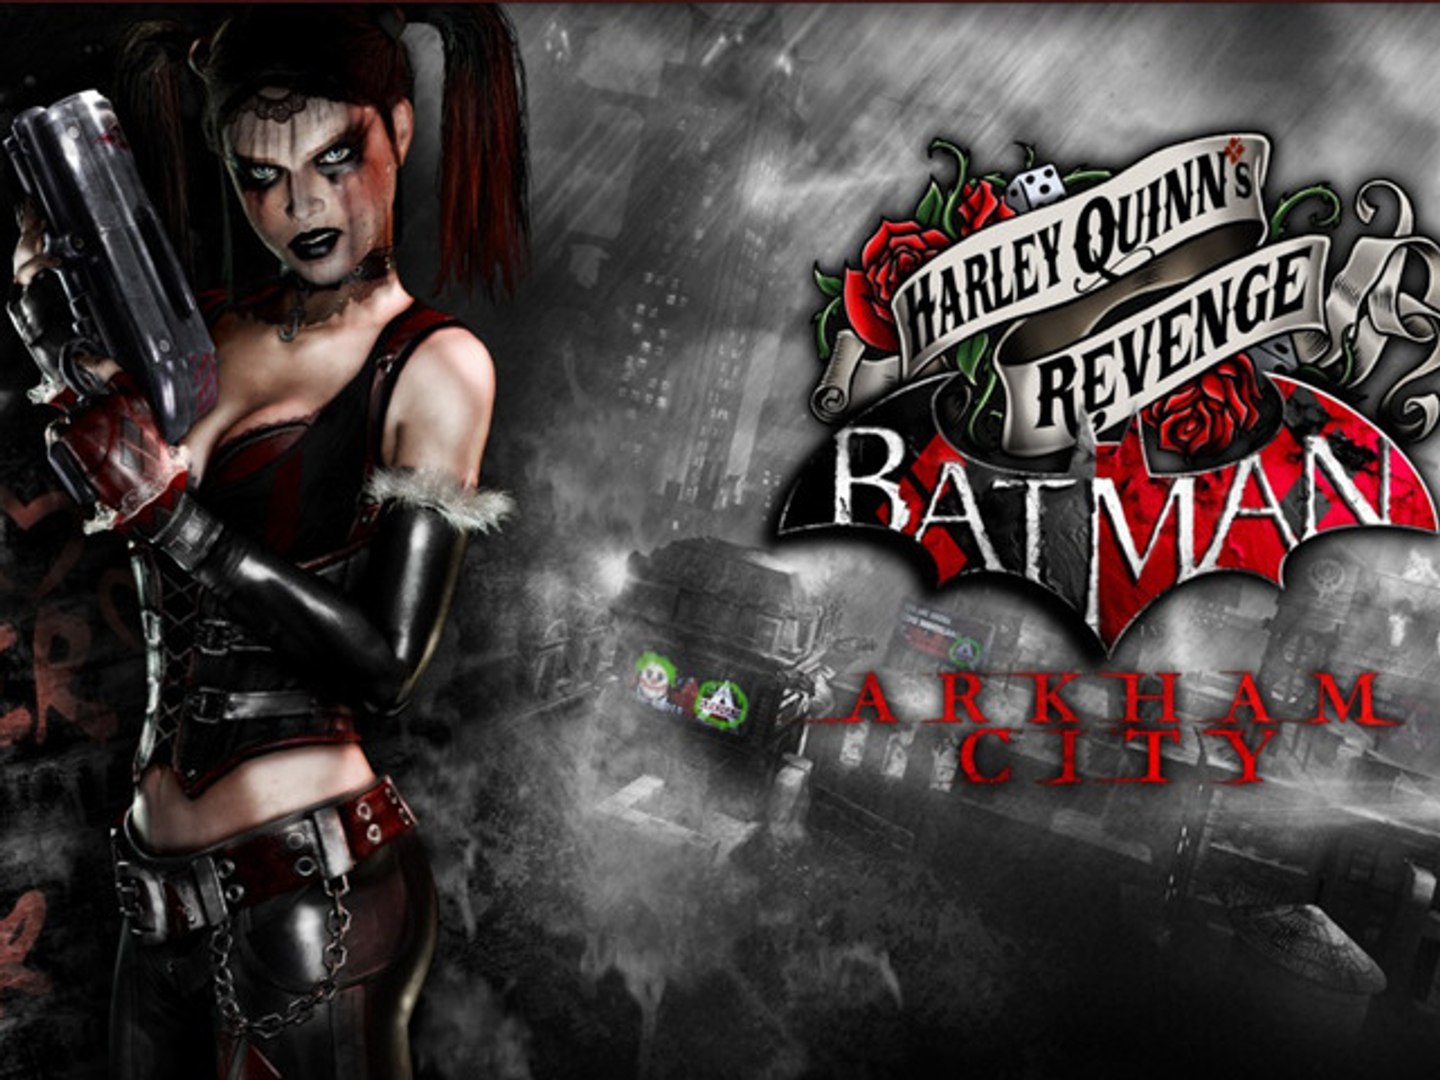 CGRundertow BATMAN: ARKHAM CITY HARLEY QUINN'S REVENGE DLC for PlayStation 3  Video Game Review - video Dailymotion